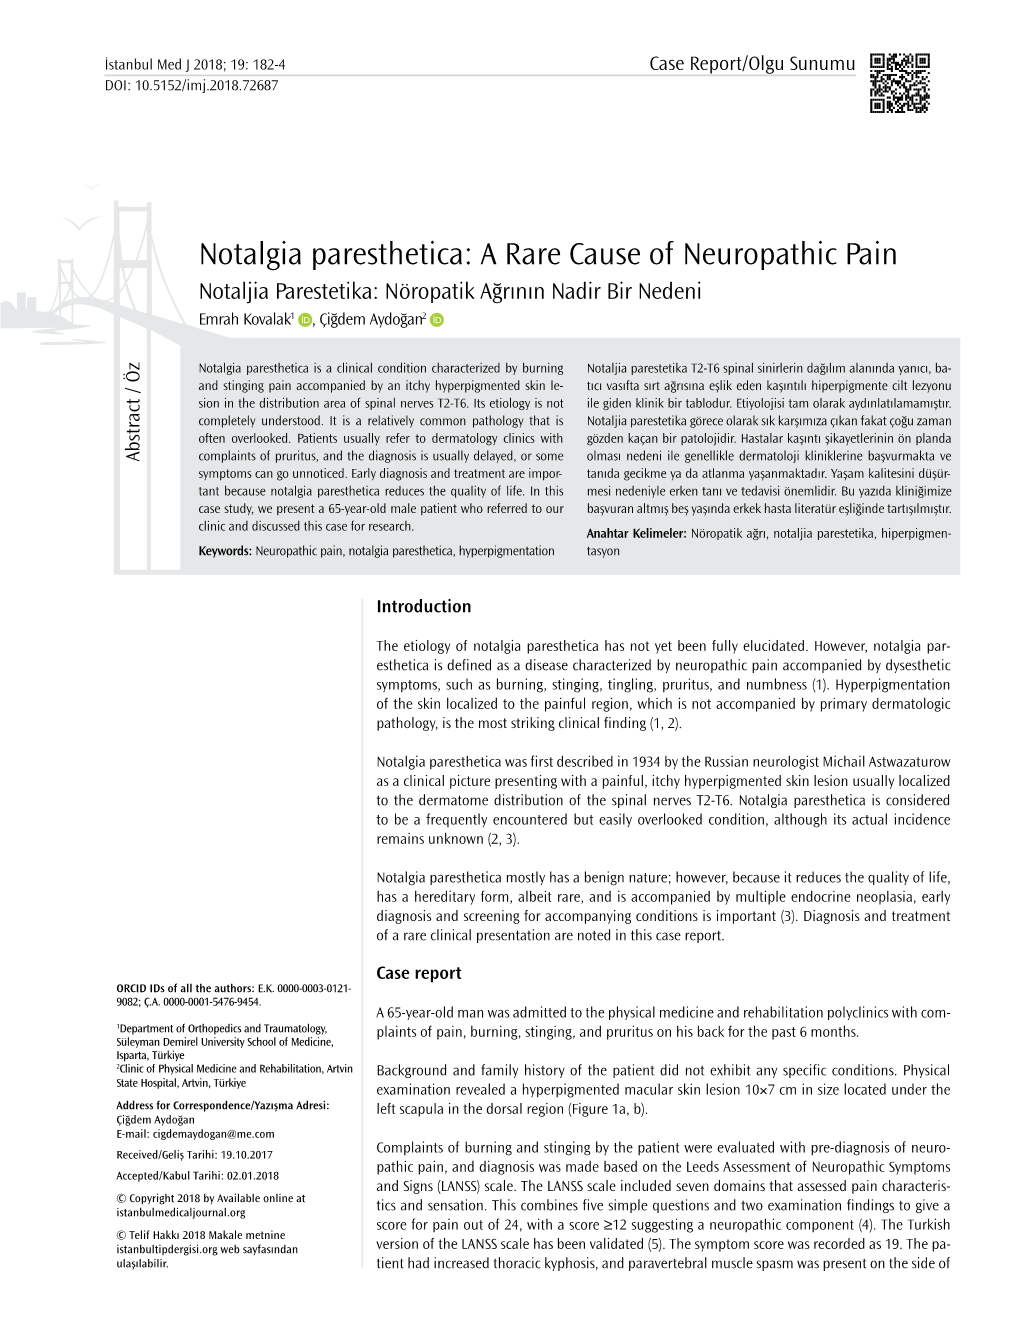 Notalgia Paresthetica: a Rare Cause of Neuropathic Pain Notaljia Parestetika: Nöropatik Ağrının Nadir Bir Nedeni Emrah Kovalak1 , Çiğdem Aydoğan2